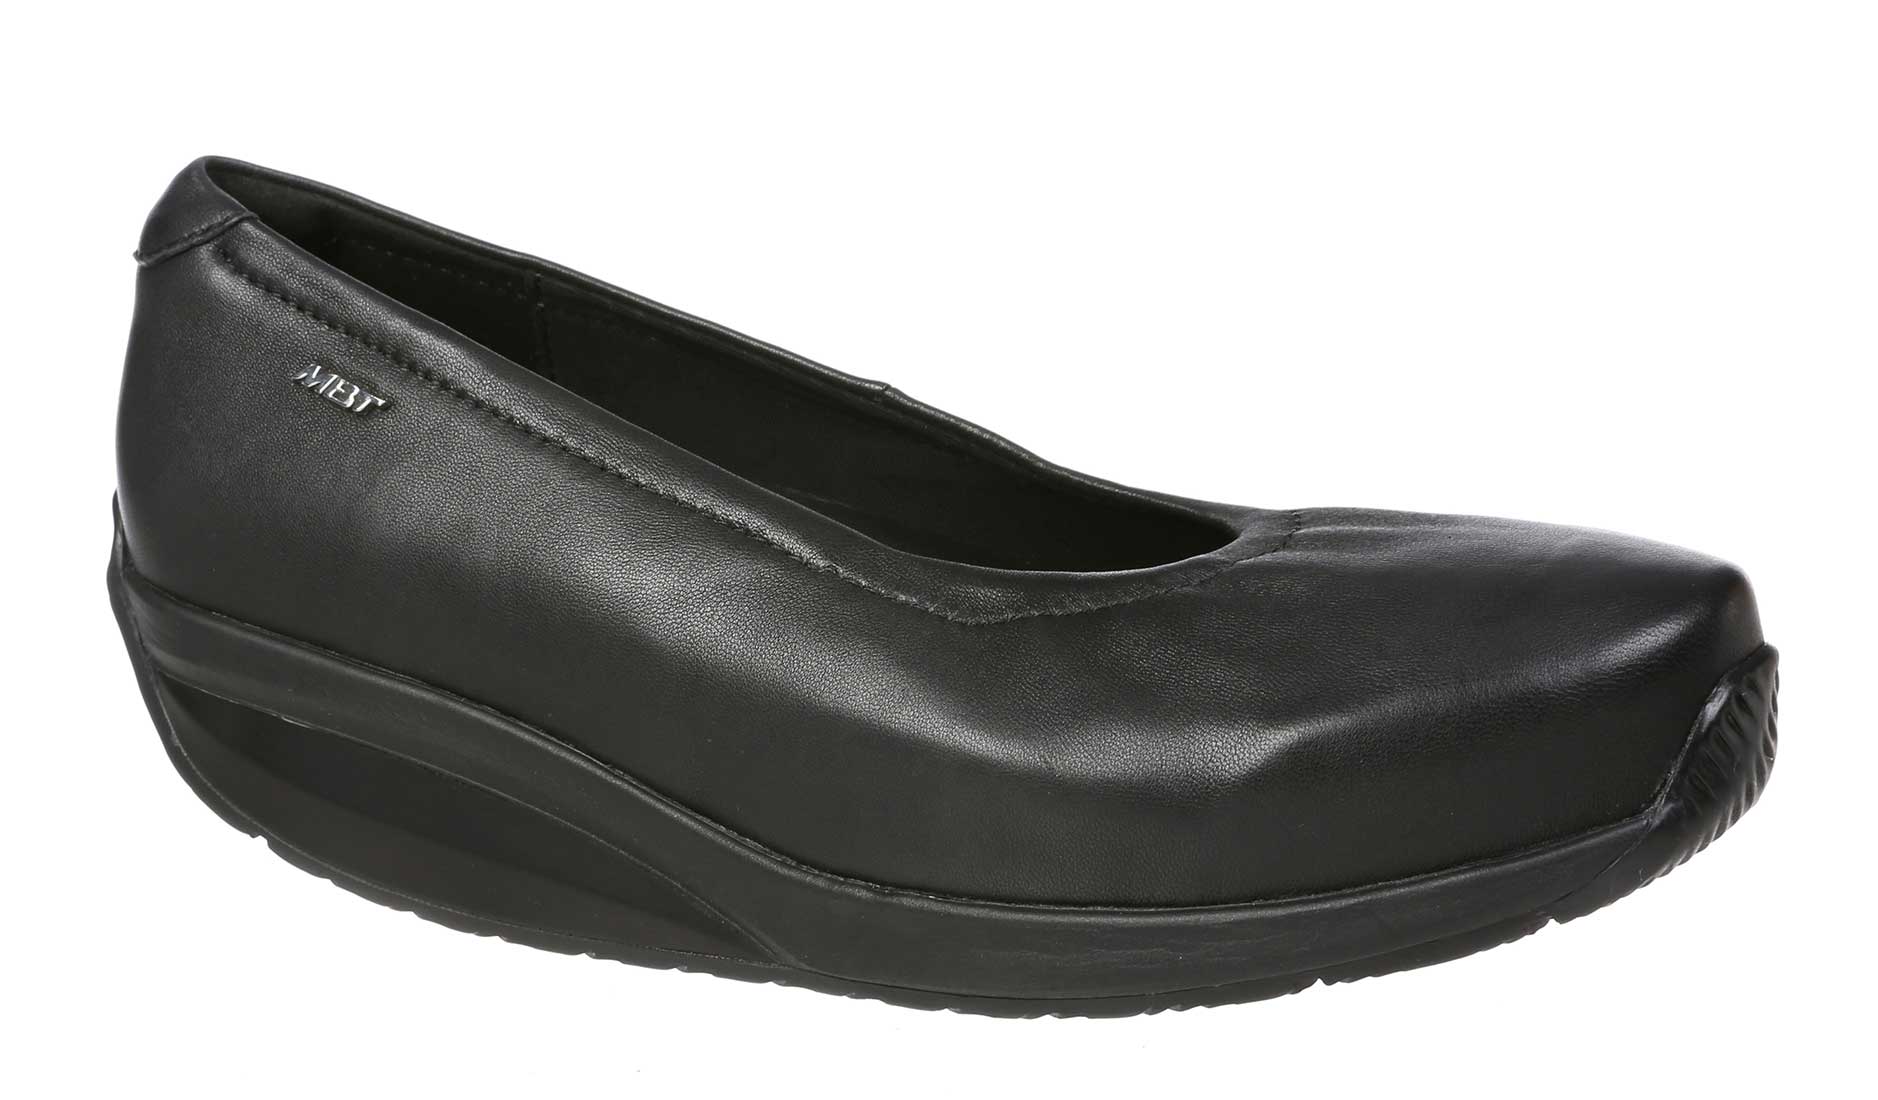 MBT Shoes Women's Harper 700981 Casual Slip